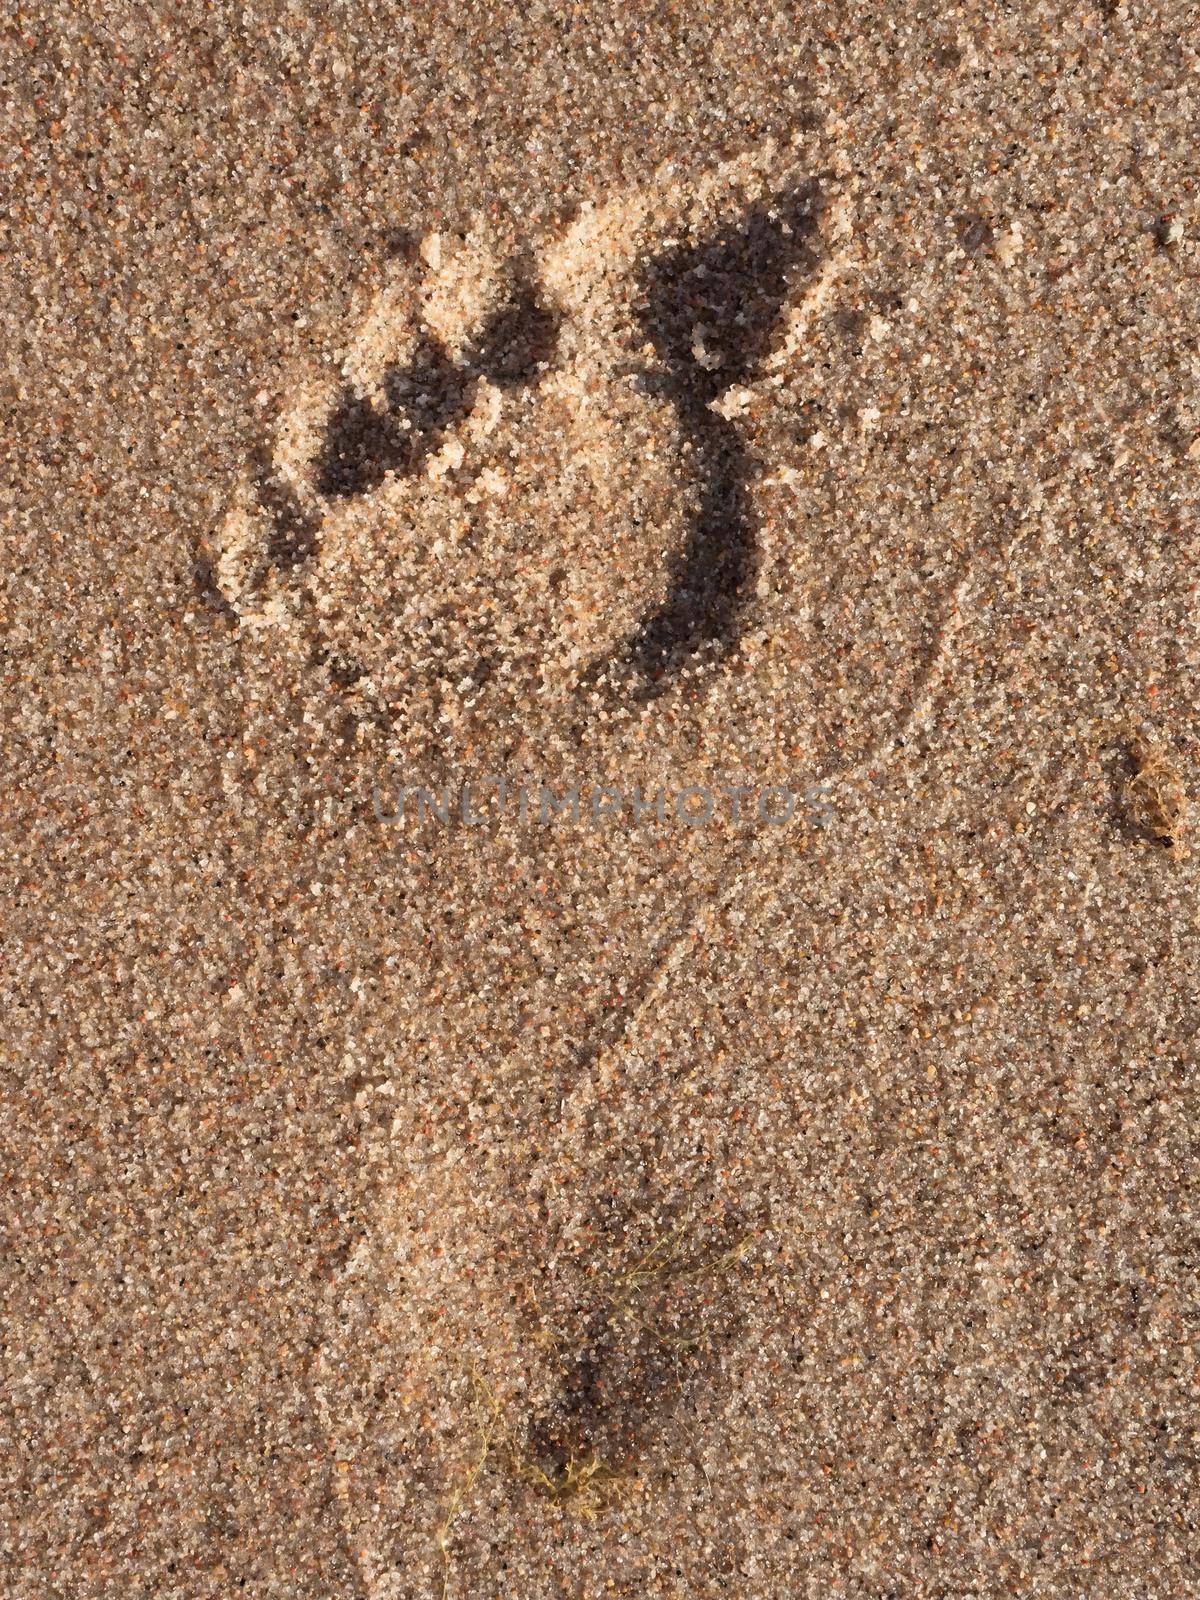 Woman gentle single footprint in wet beach sand